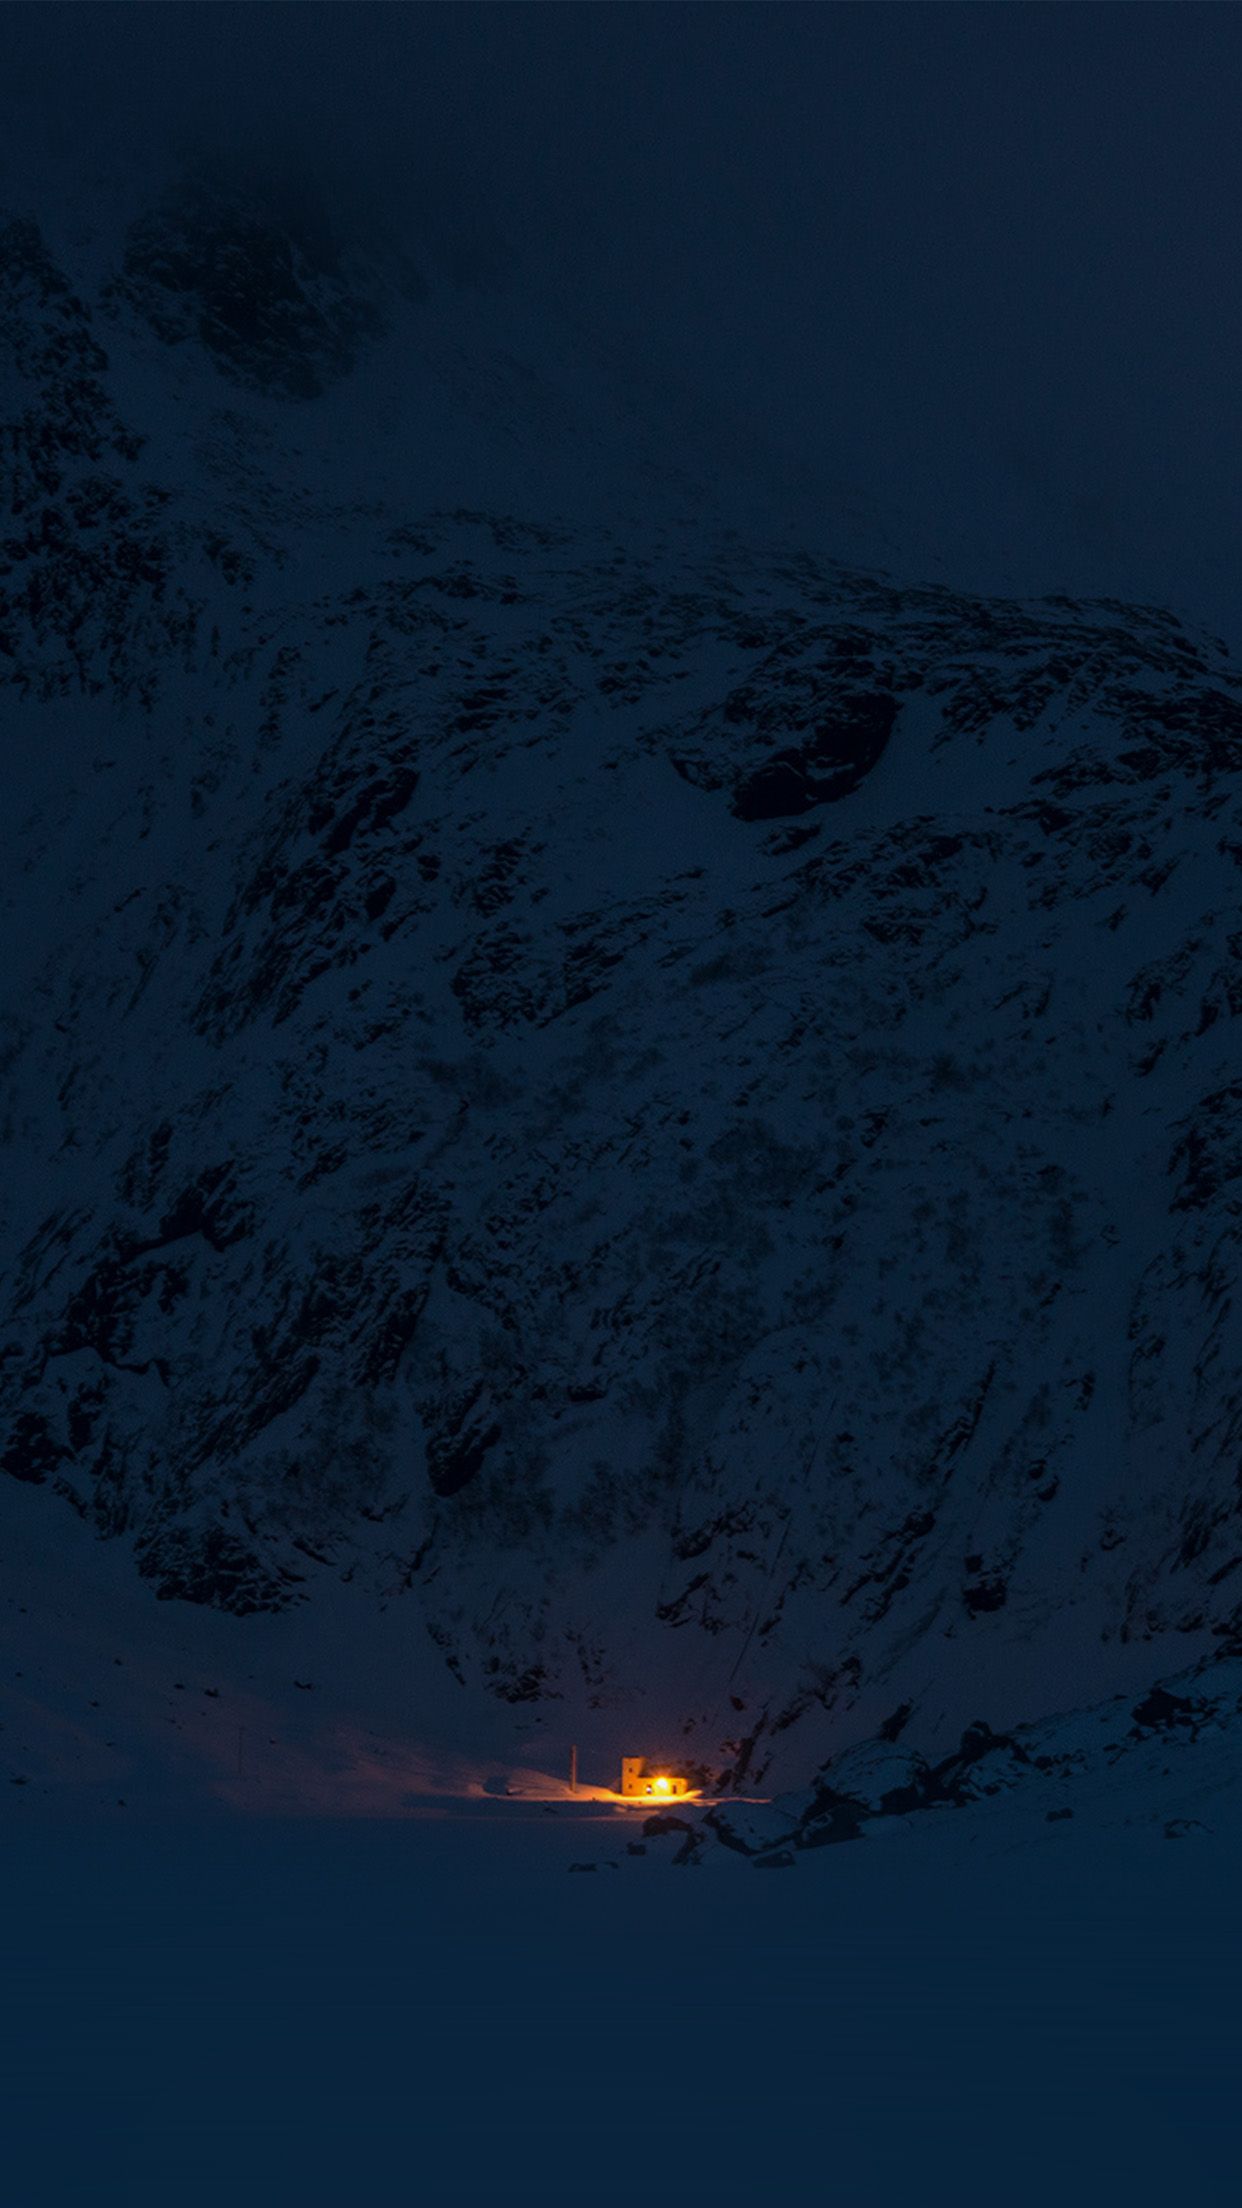 iPhone X wallpaper. mountain night light